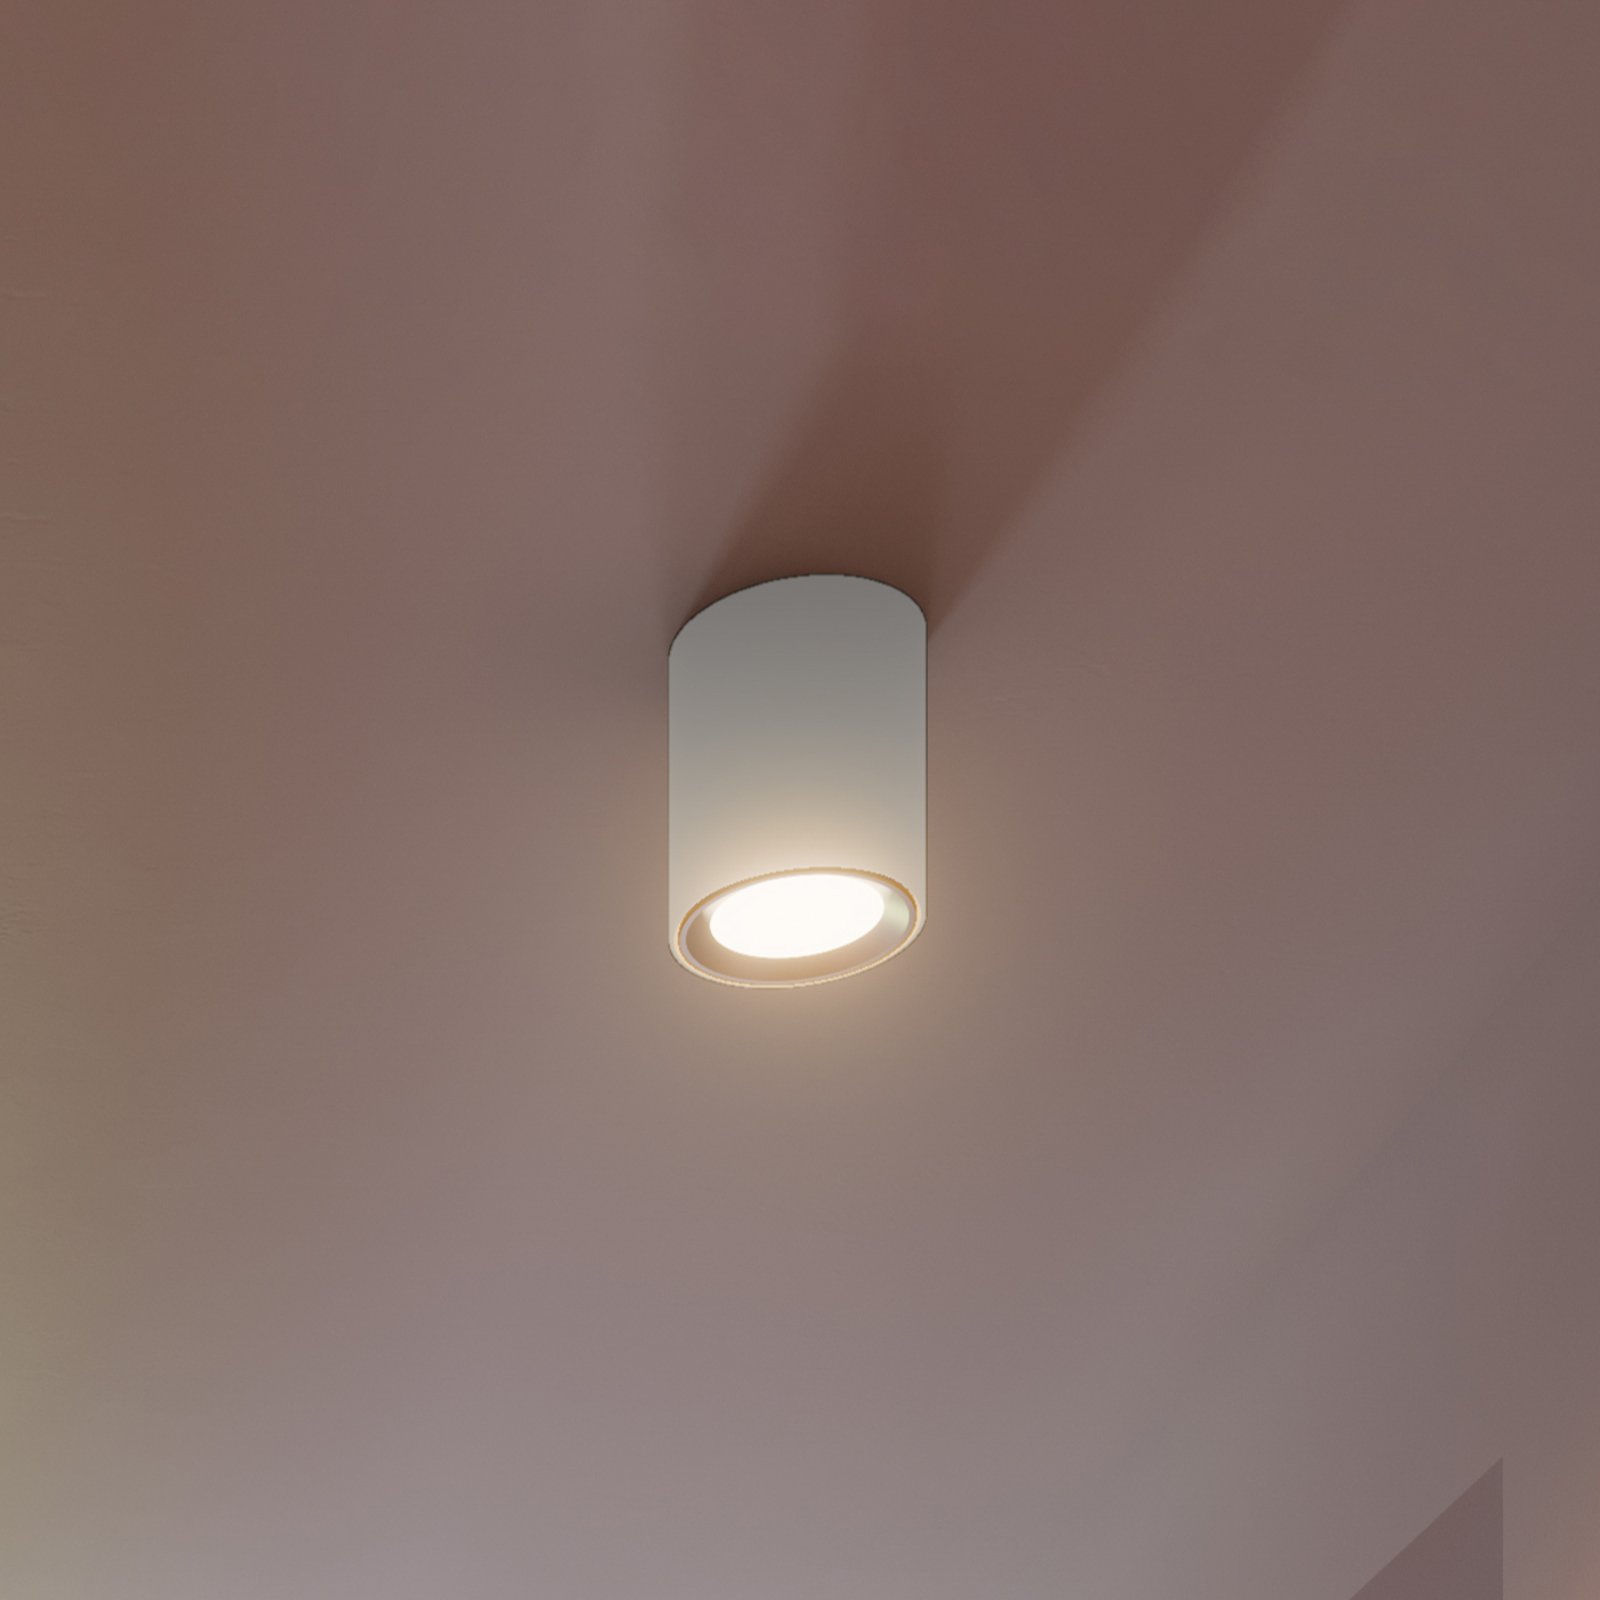 LED-Deckenspot Landon Smart, weiß, Höhe 14 cm